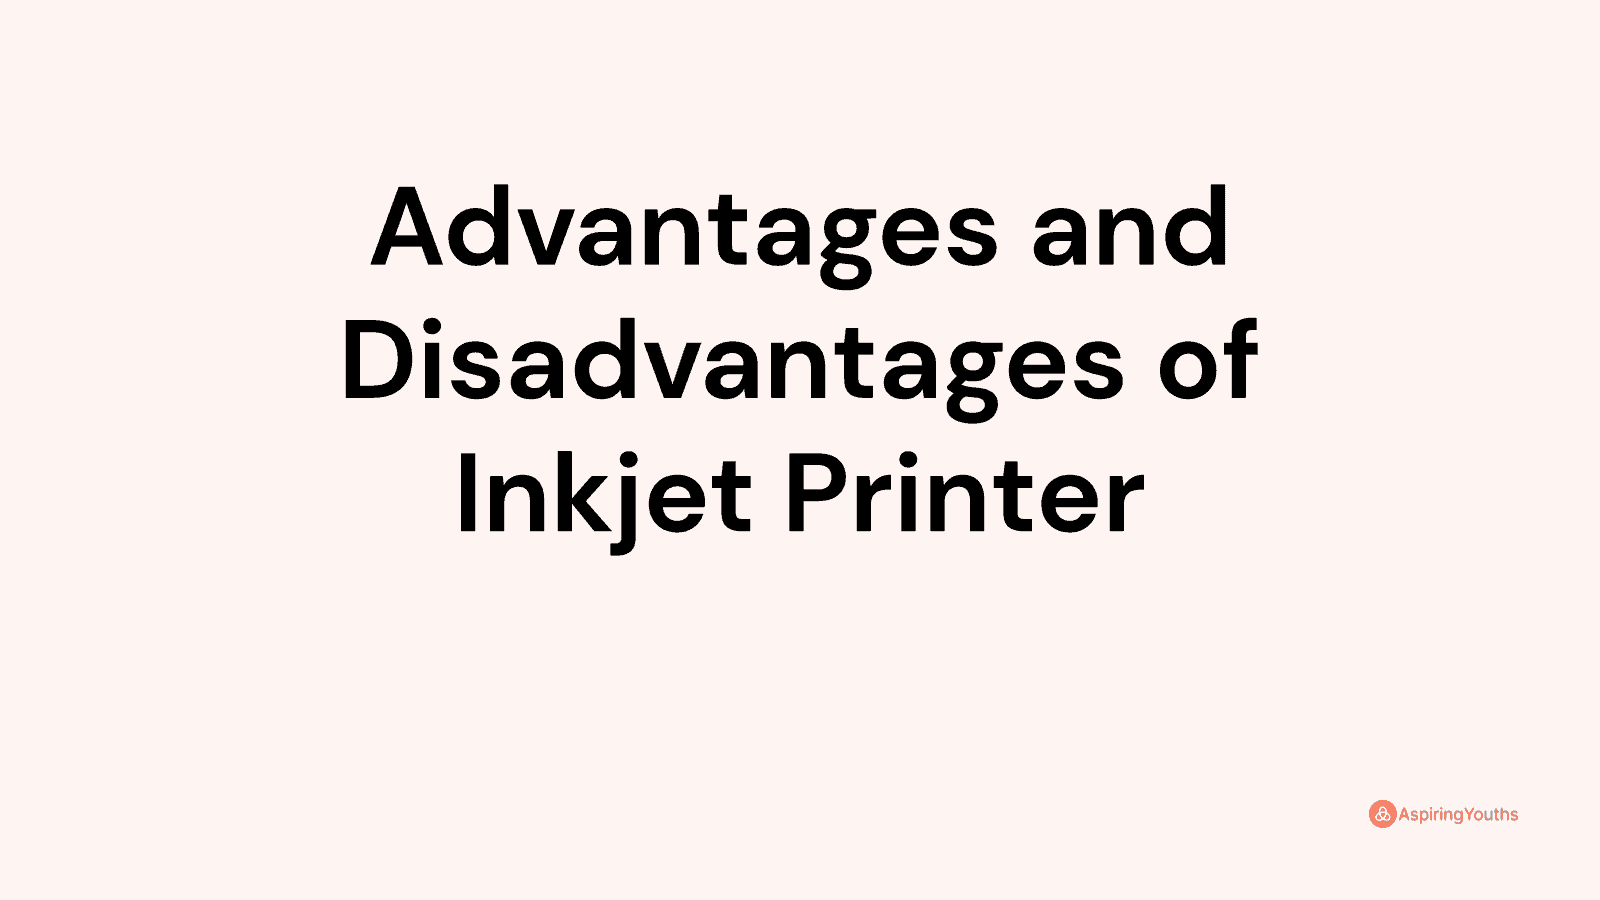 Advantages and disadvantages of Inkjet Printer